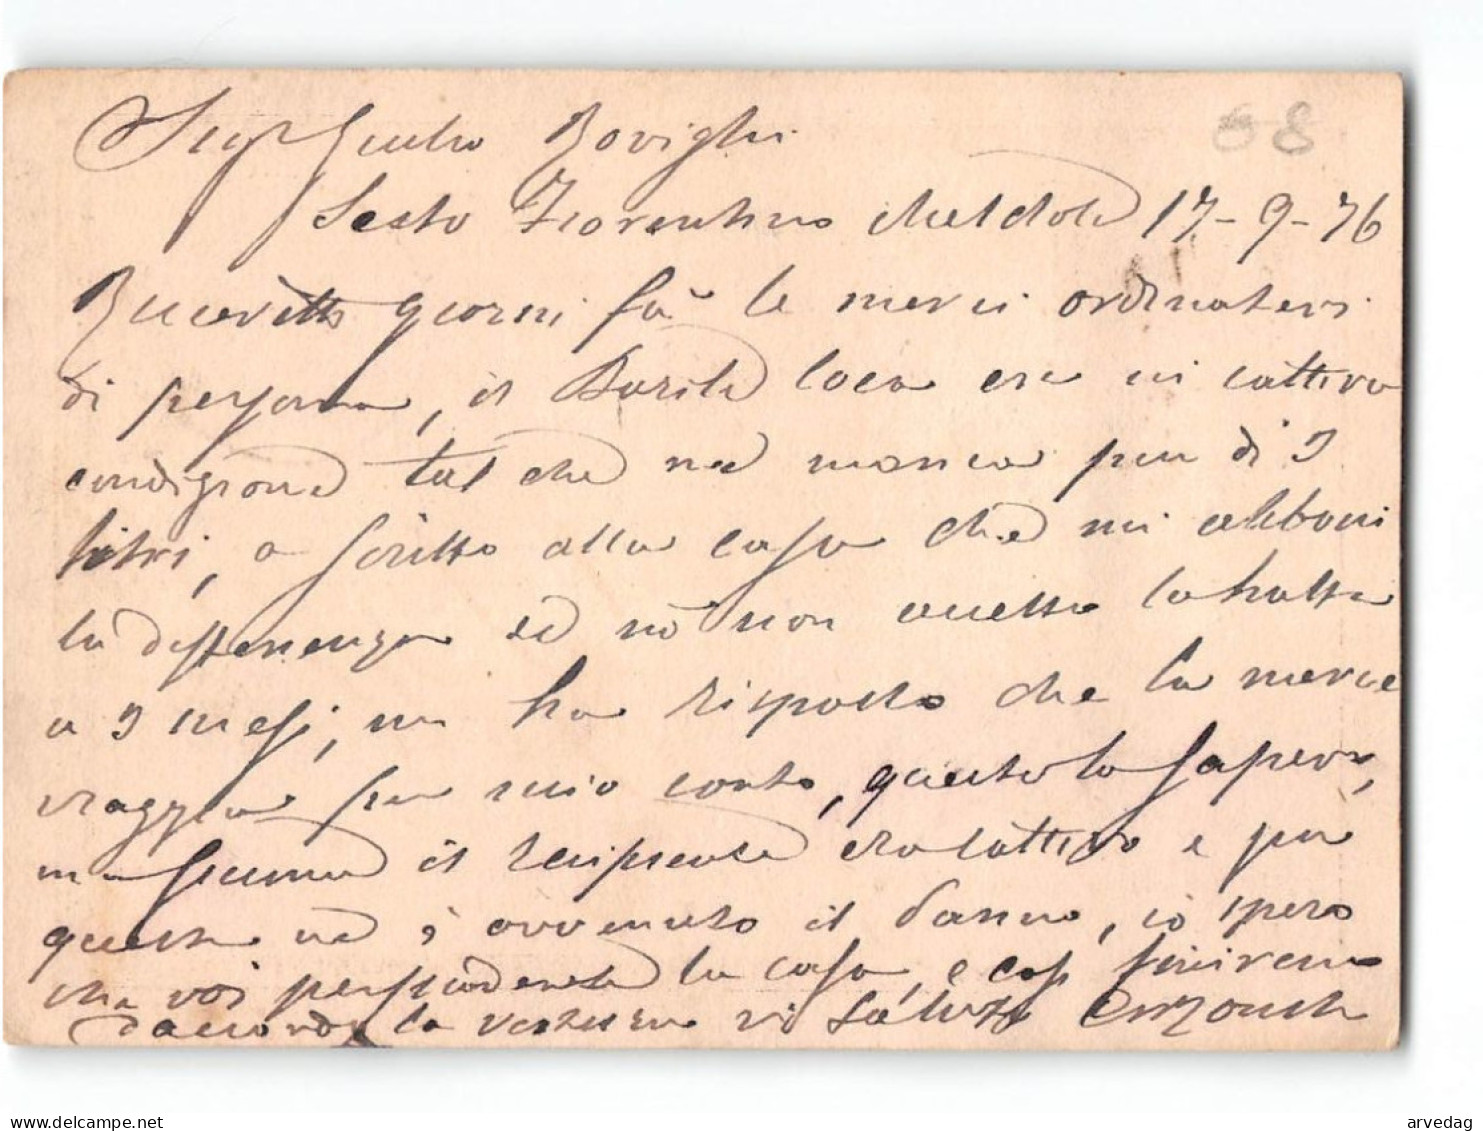 17948 01 CARTOLINA POSTALE 10 CENT - CIRO RONCHI MELDOLA X SESTO FIORENTINO - 1876 - Interi Postali